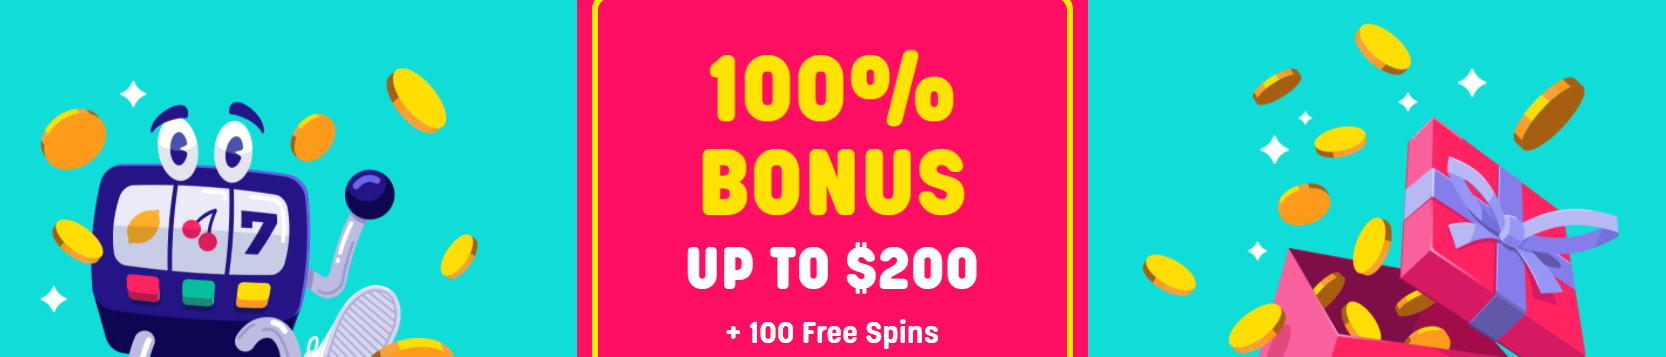 caxino 100% bonus and 100 free spins